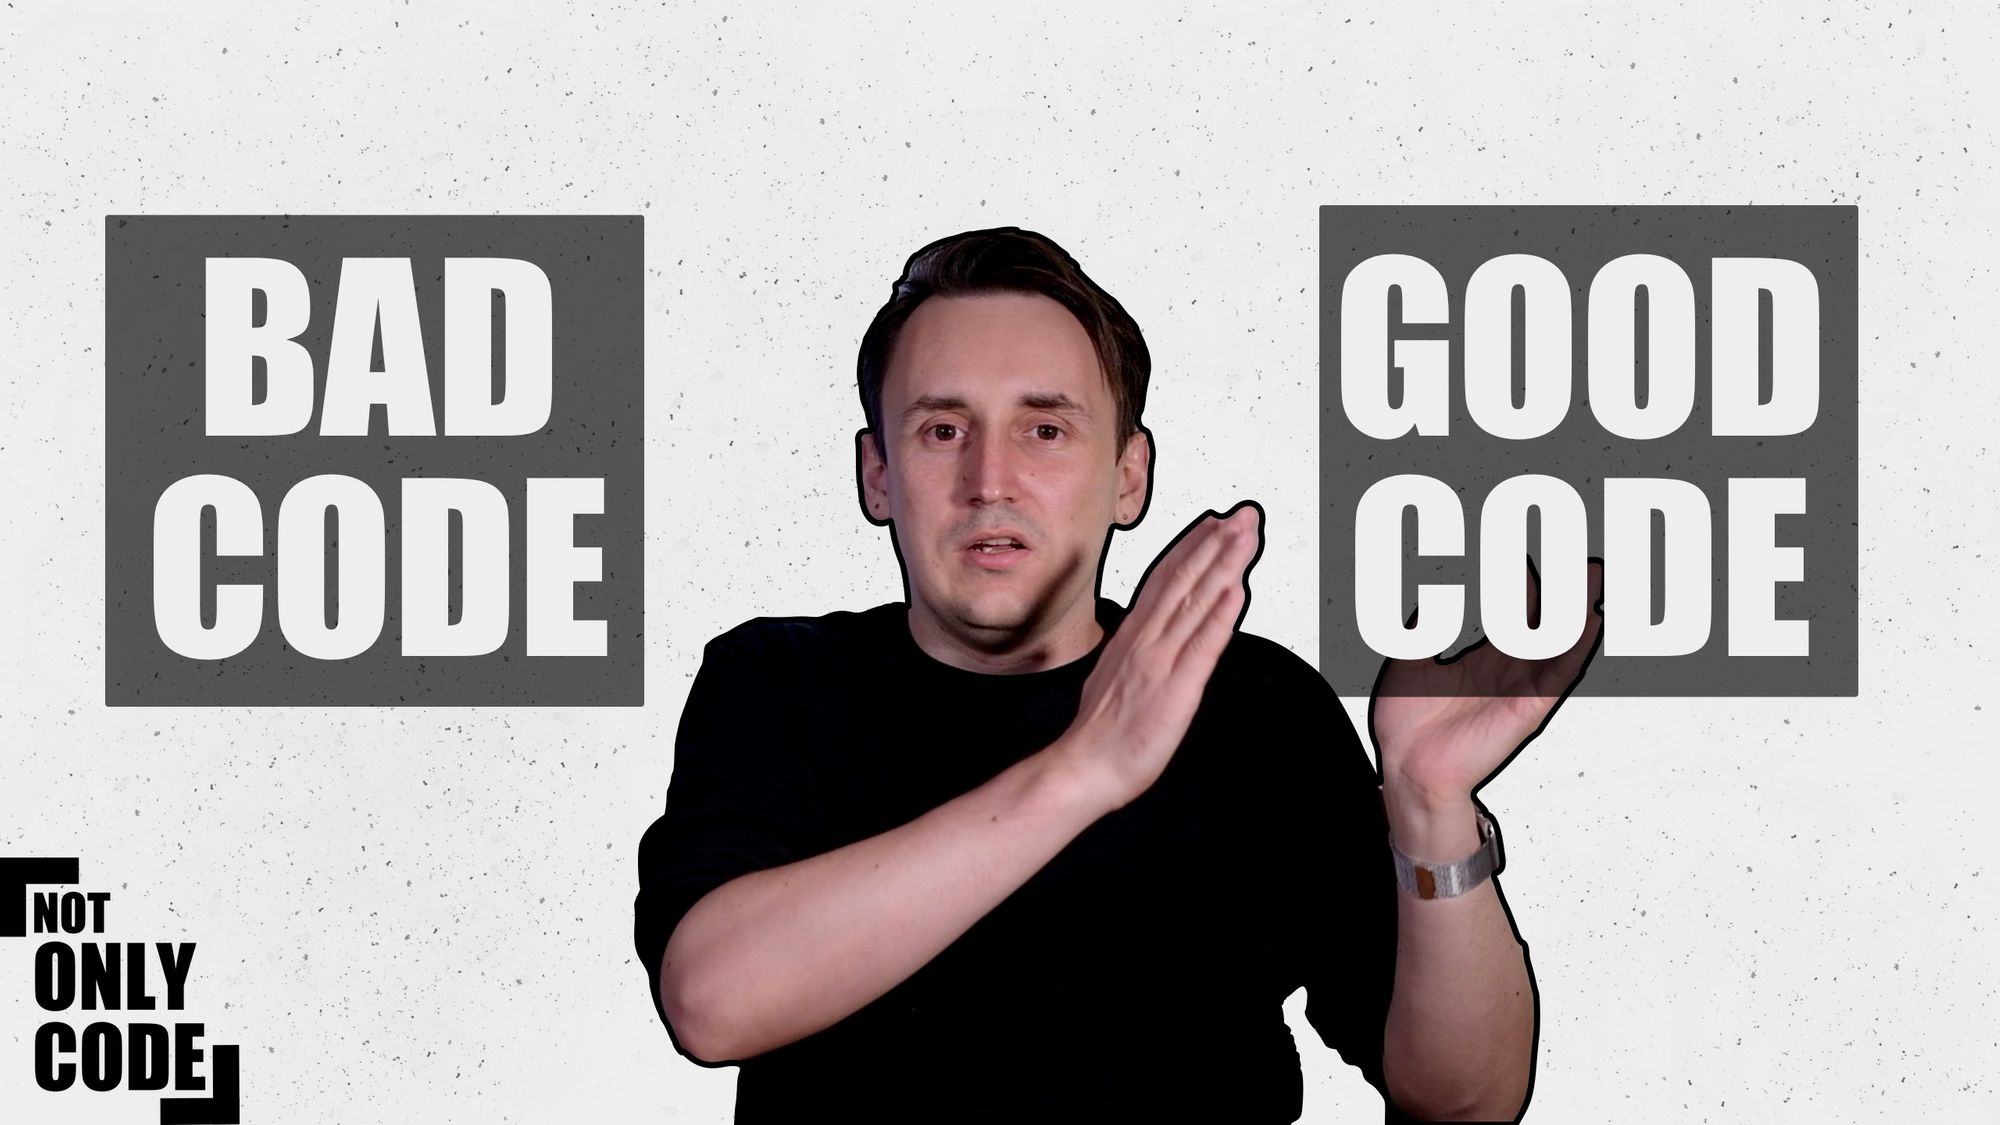 Good code, bad code